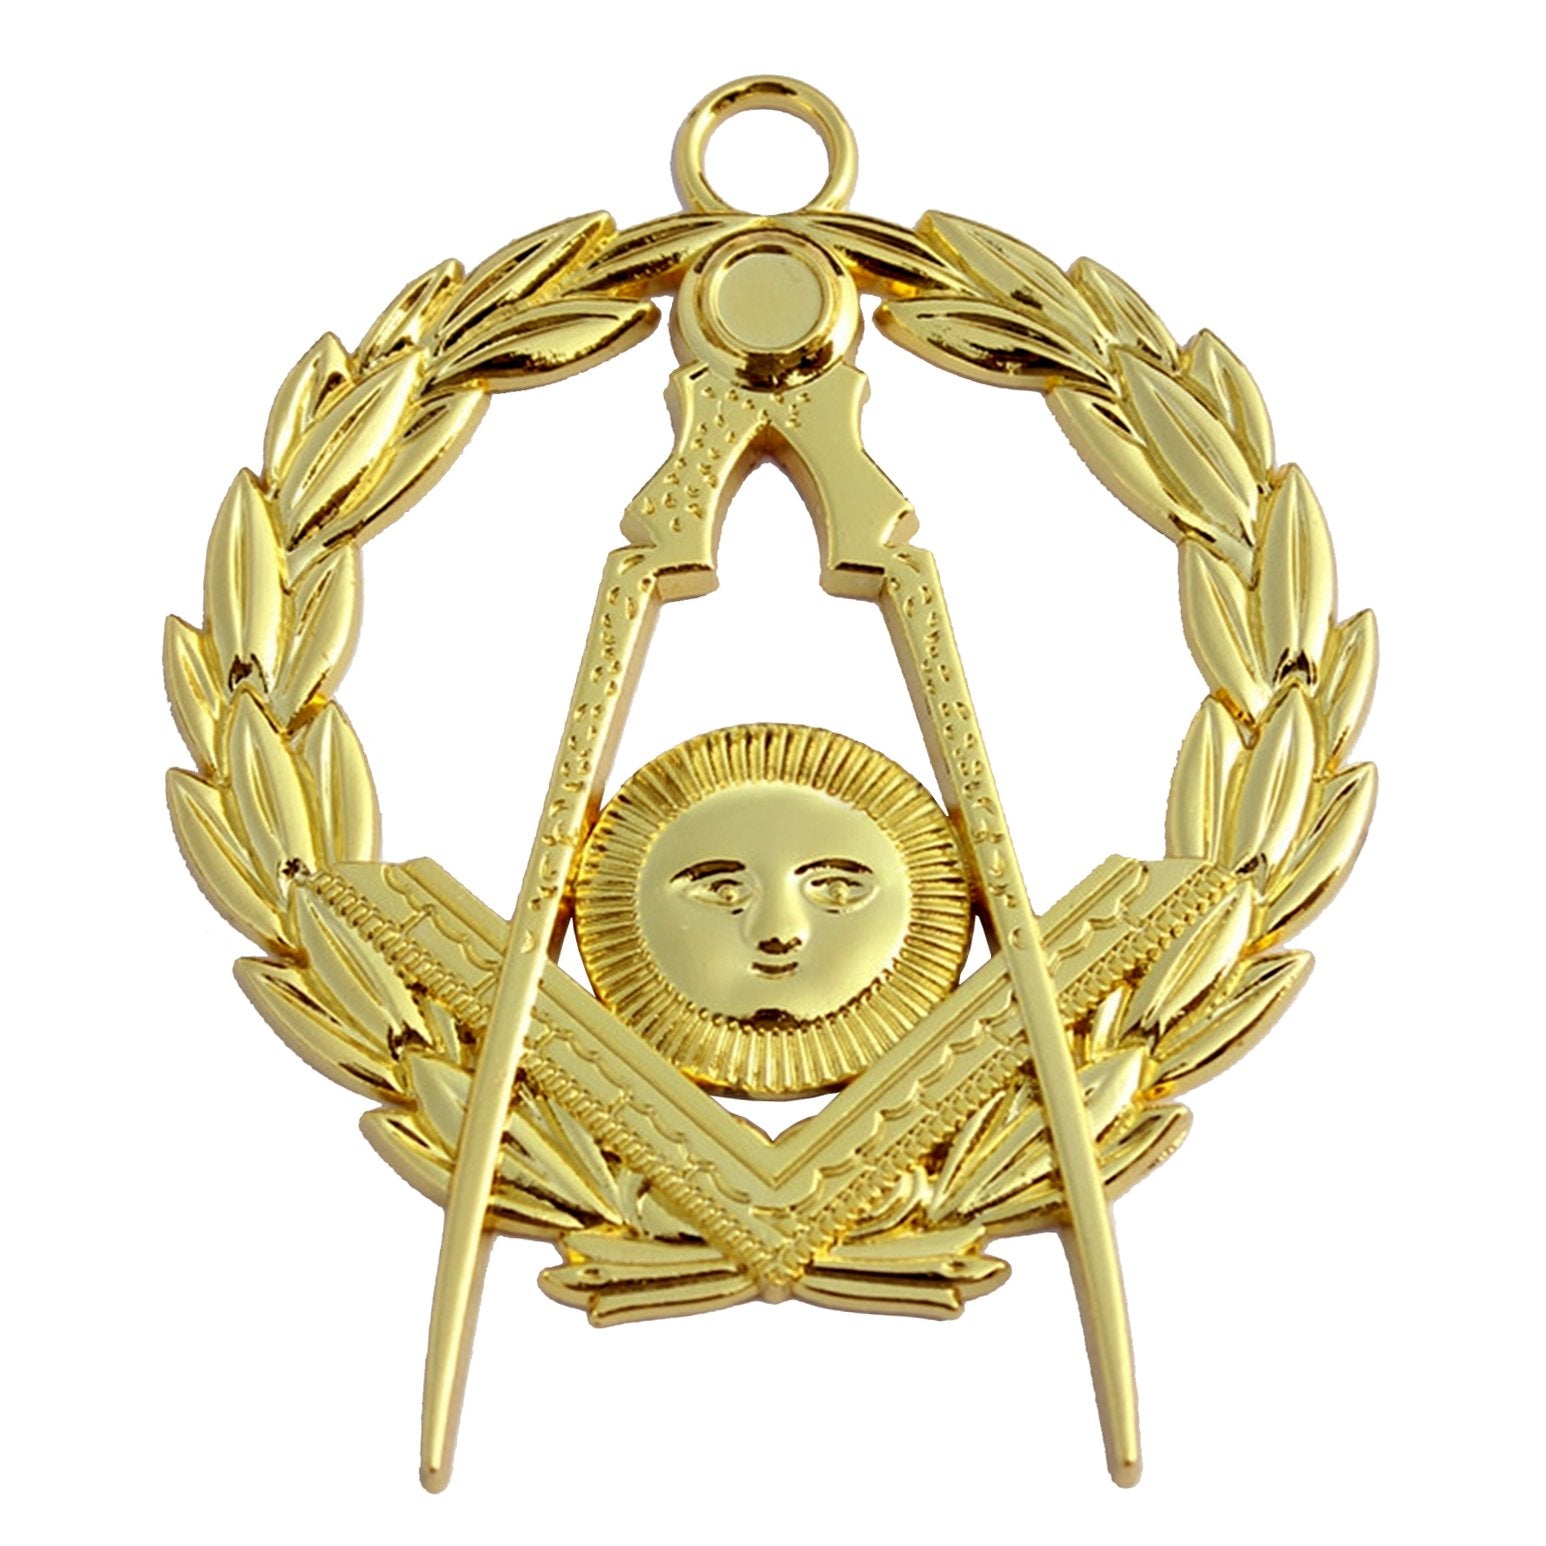 Senior Grand Deacon Blue Lodge Officer Collar Jewel - Gold Metal - Bricks Masons